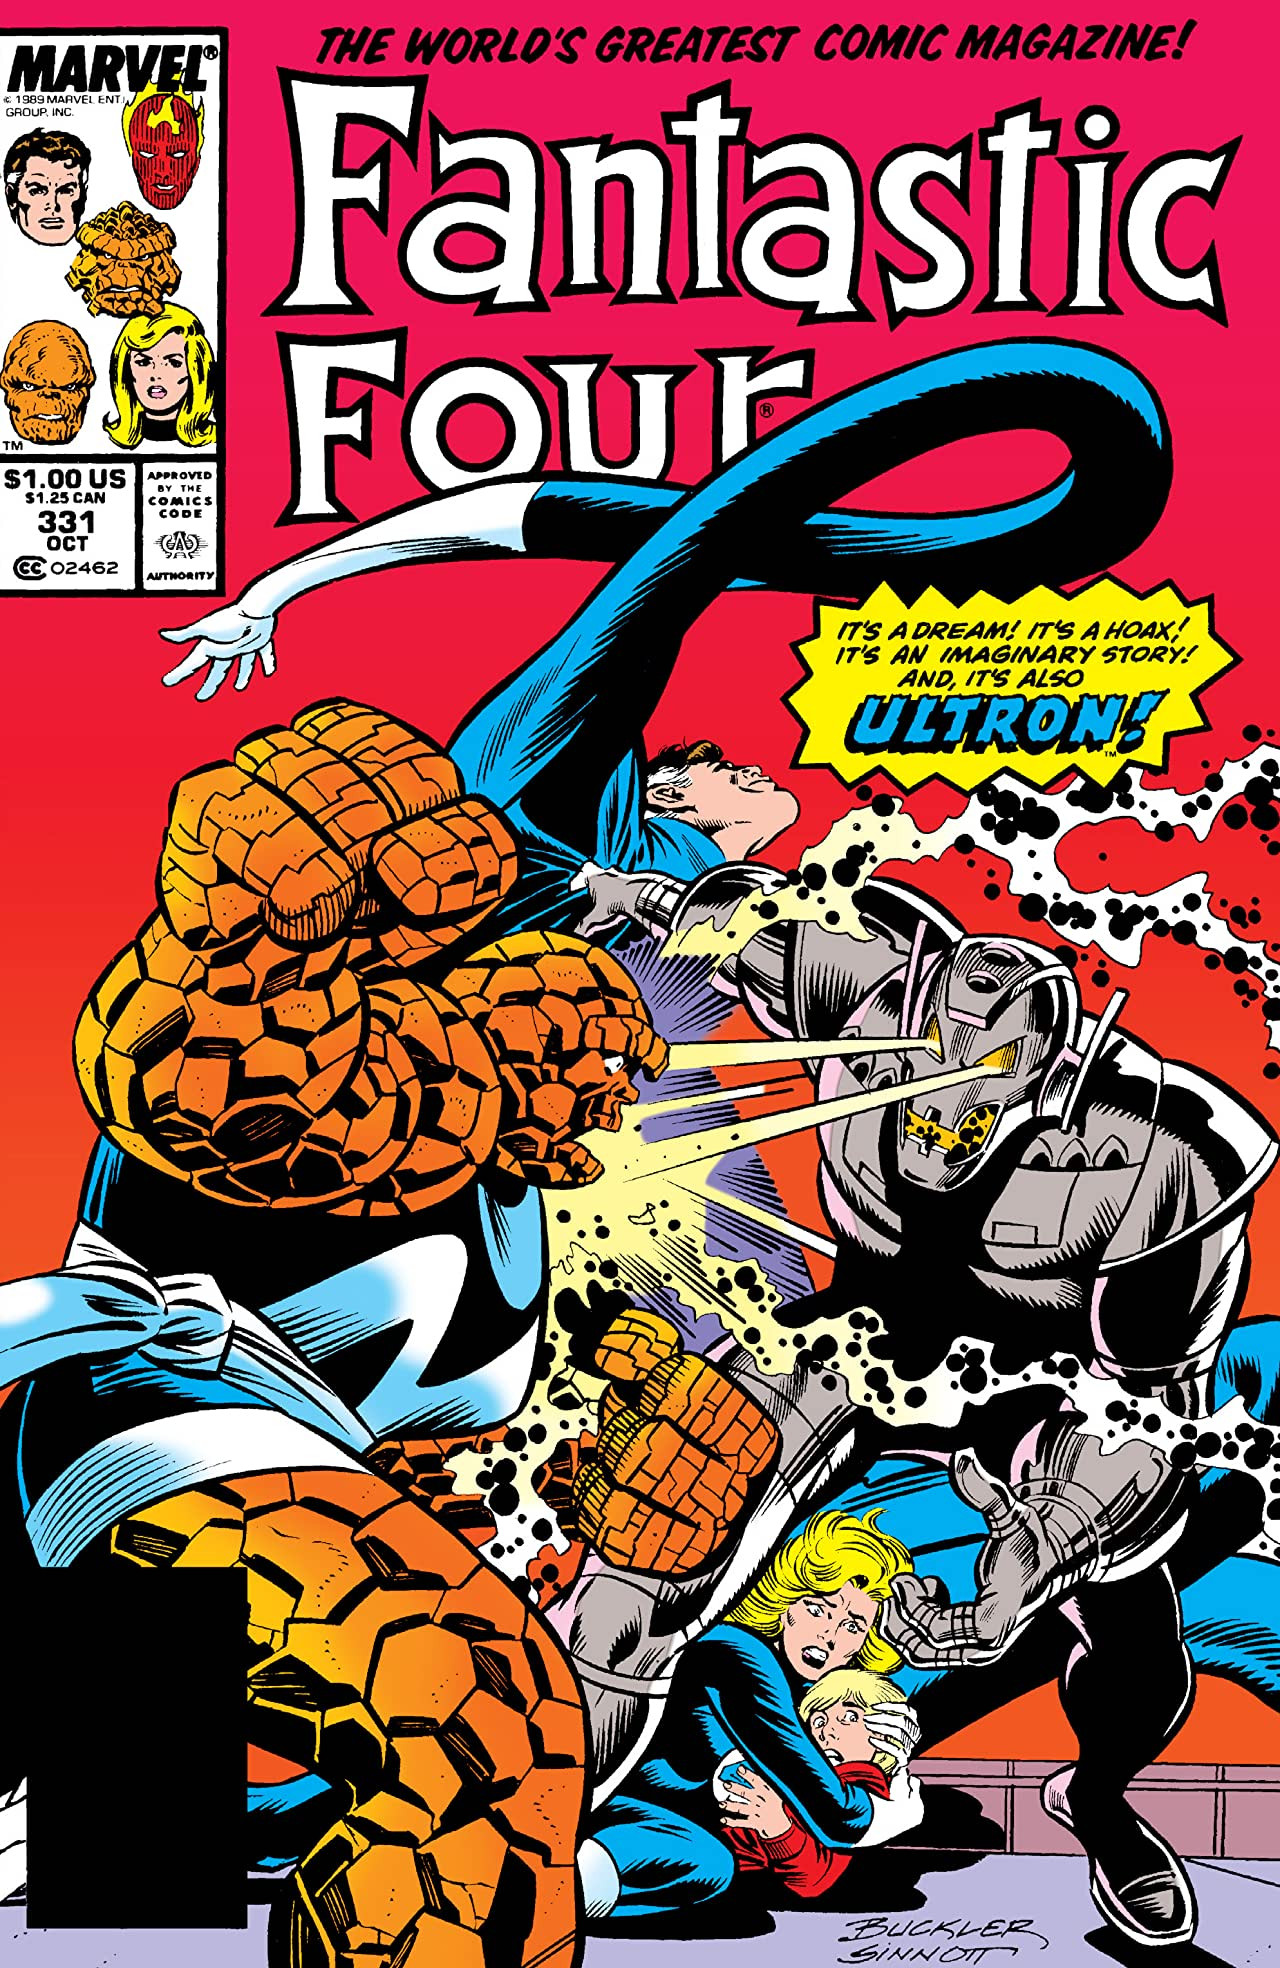 Fantastic Four Vol 1 331 | Marvel Database | Fandom